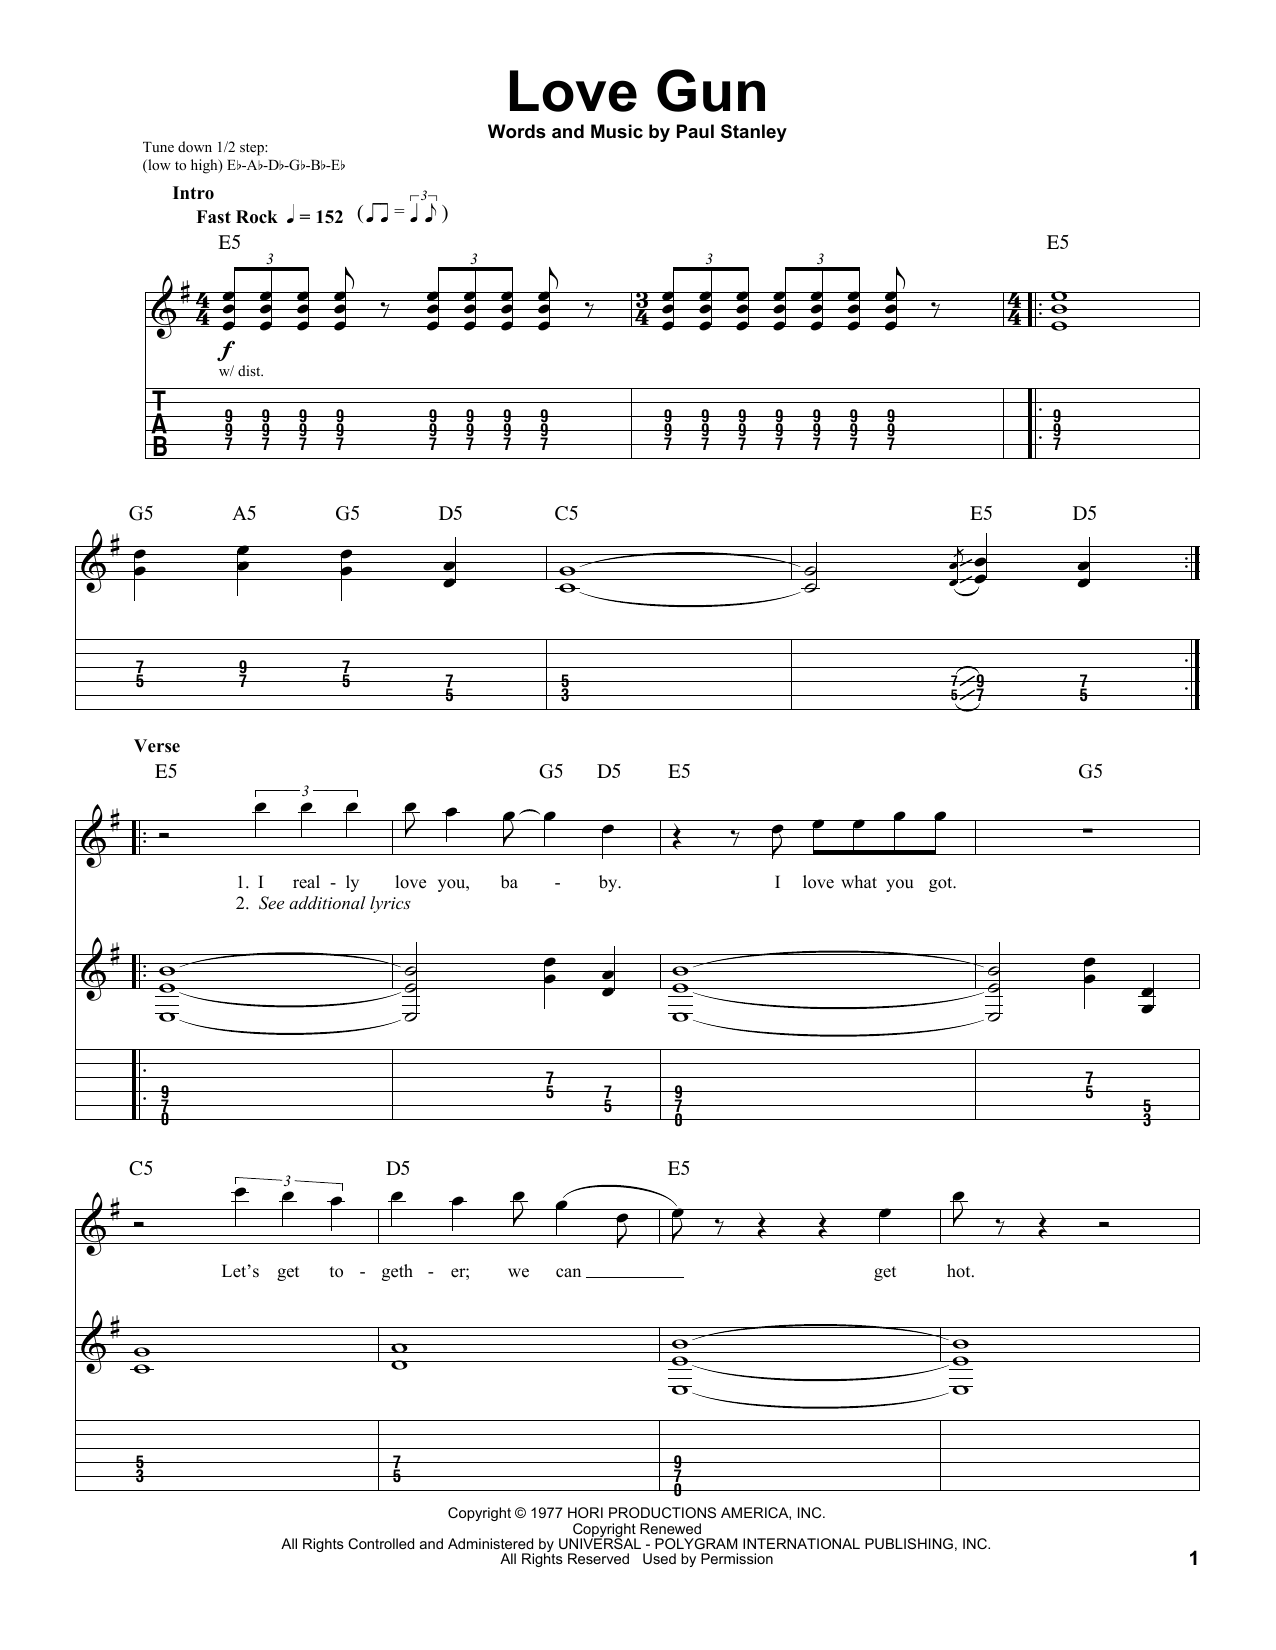 KISS Love Gun Sheet Music Notes & Chords for Guitar Tab Play-Along - Download or Print PDF